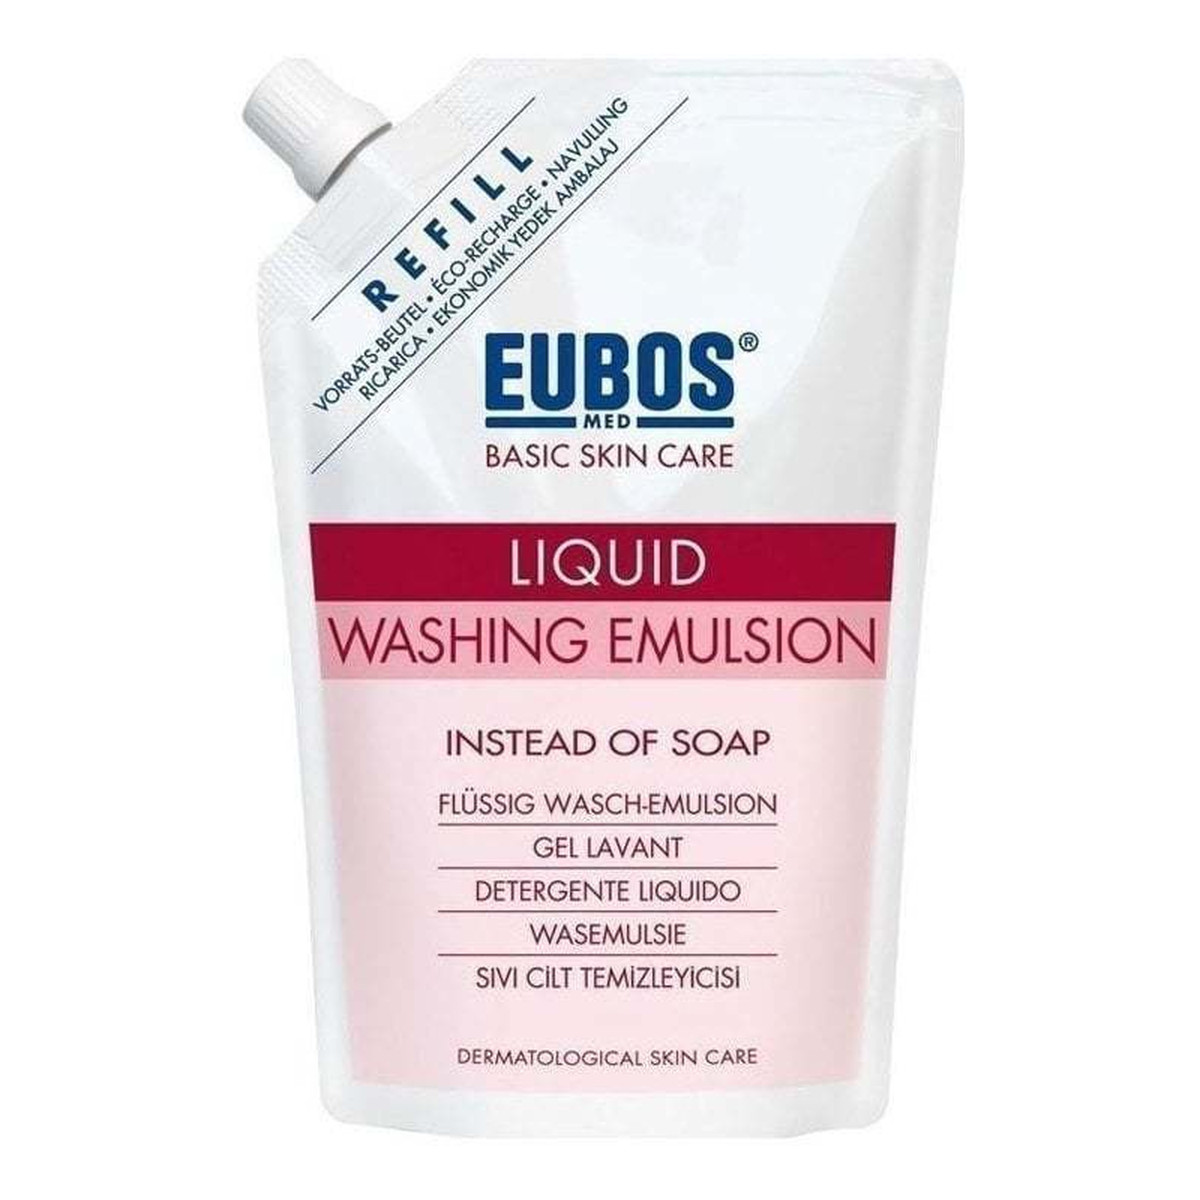 Eubos-Med Basic Skin Care emulsja do mycia zapas 400ml